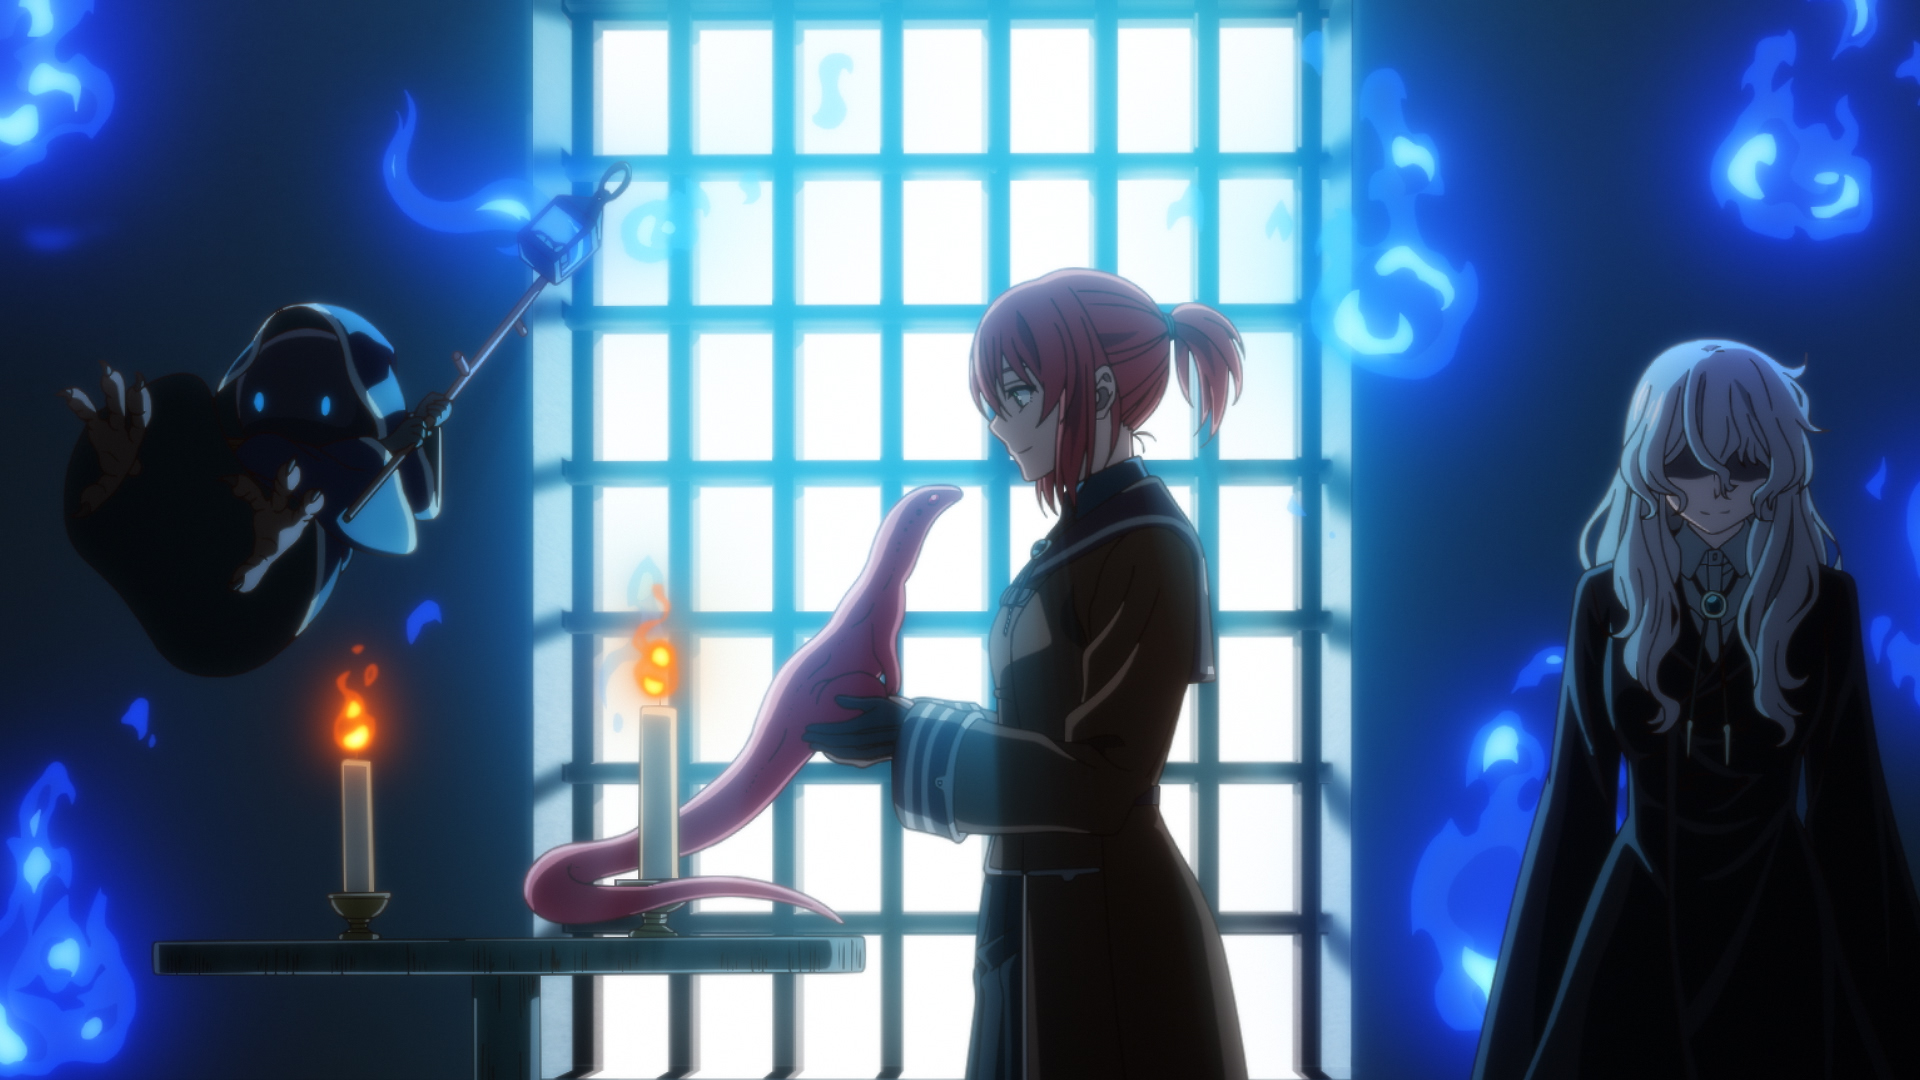 Anime Corner - JUST IN: Sk8 the Infinity season 2 & OVA